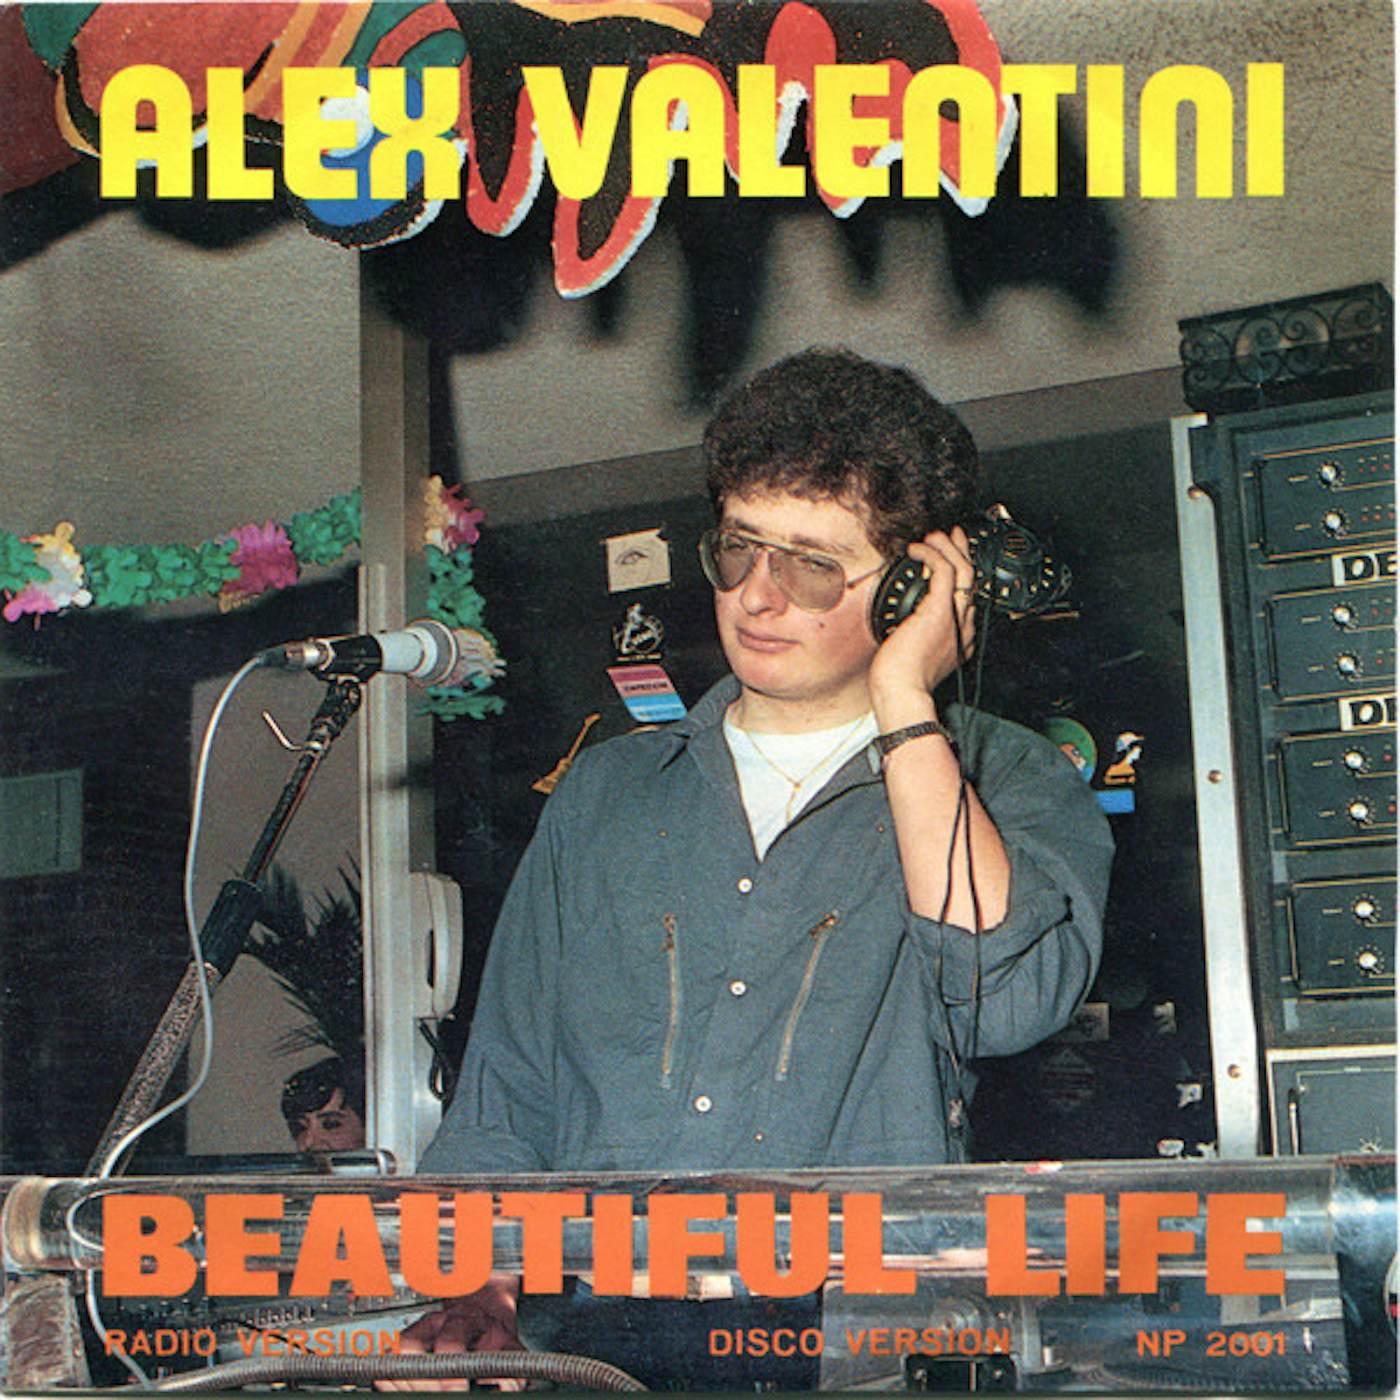 Alex Valentini Beautiful Life Vinyl Record